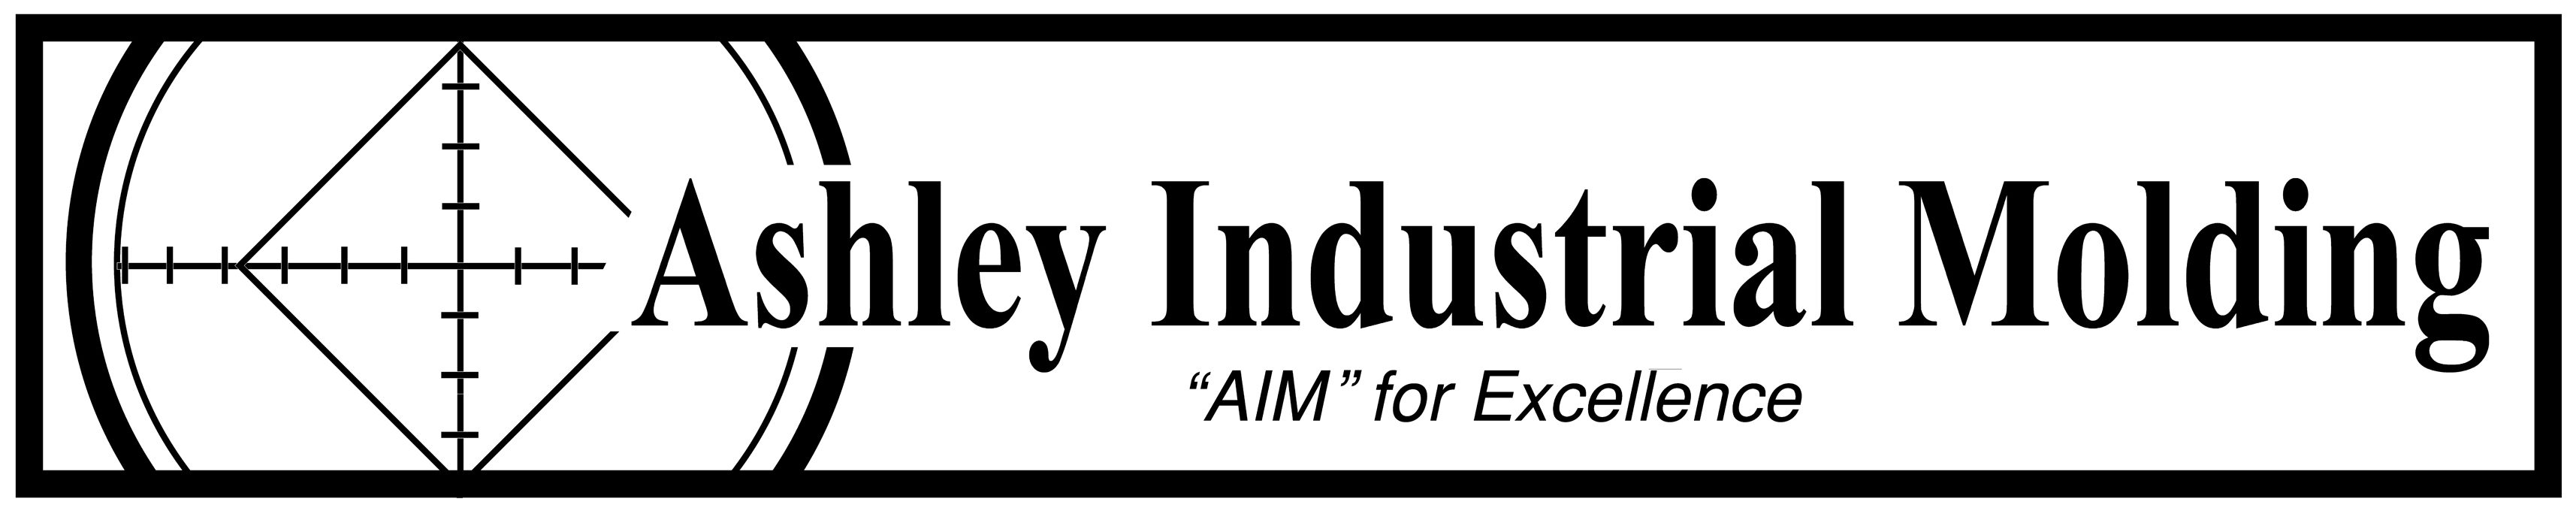 Ashley Industrial Molding